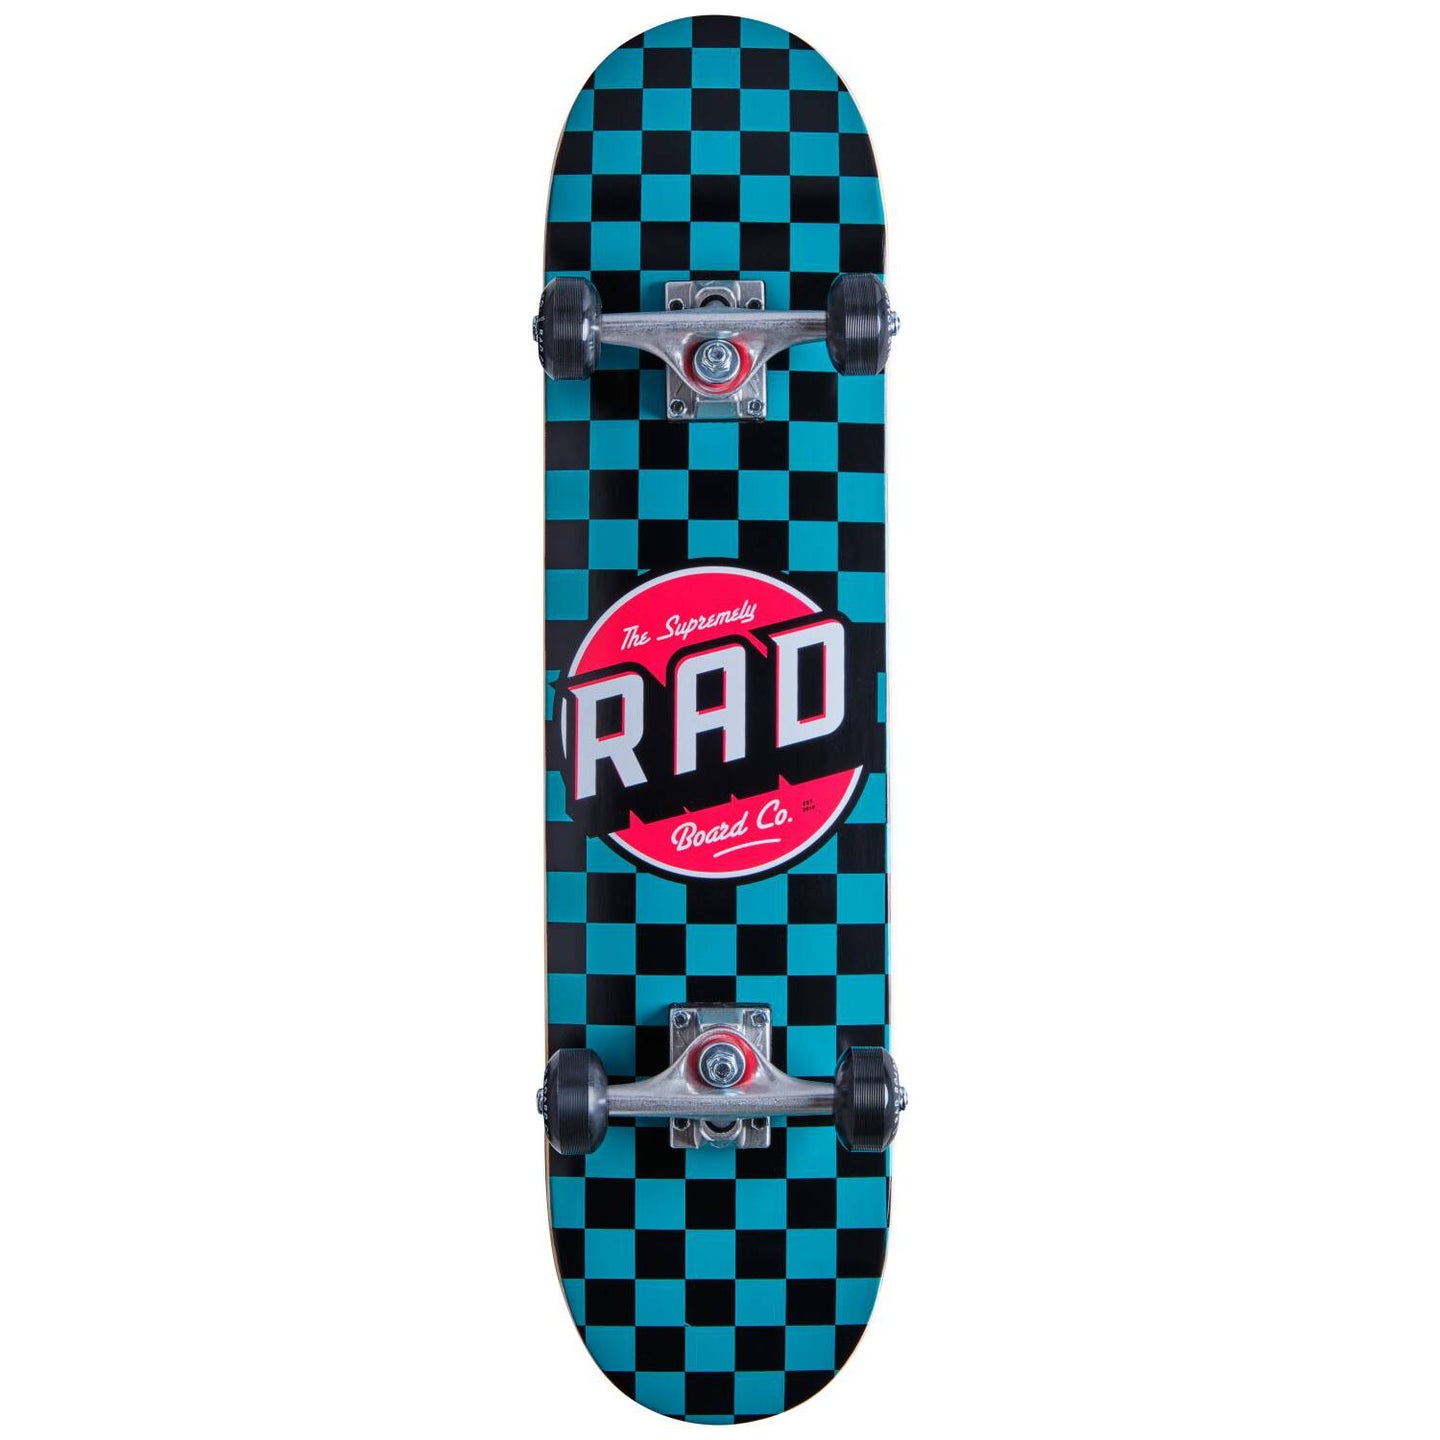 RAD Checkers Komplet Skateboard - Teal-ScootWorld.dk